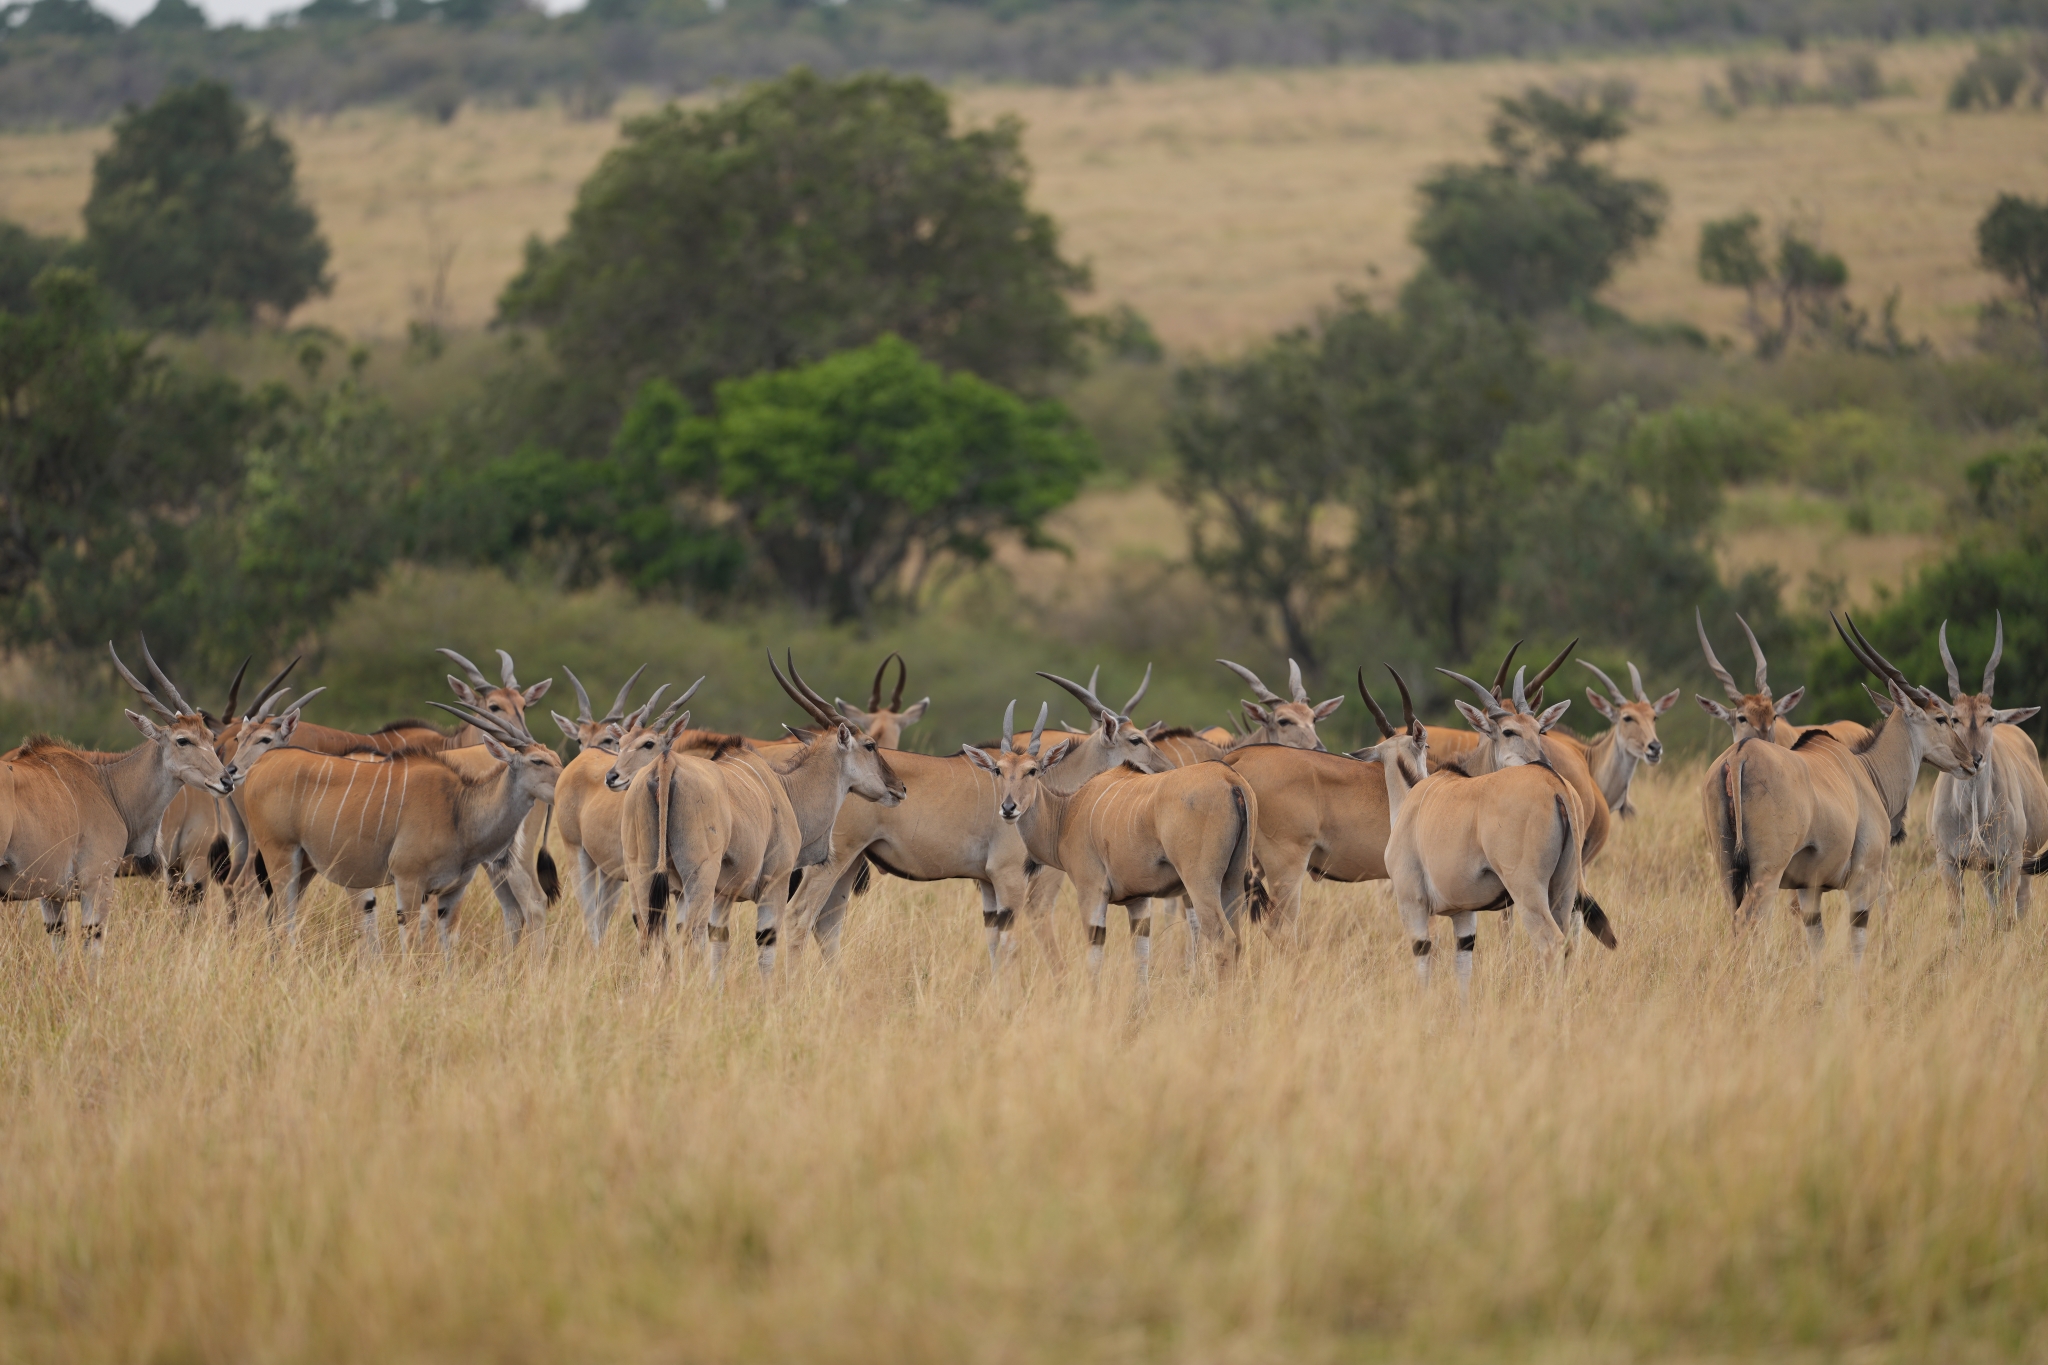 A herd of gazelle on a grassy plain